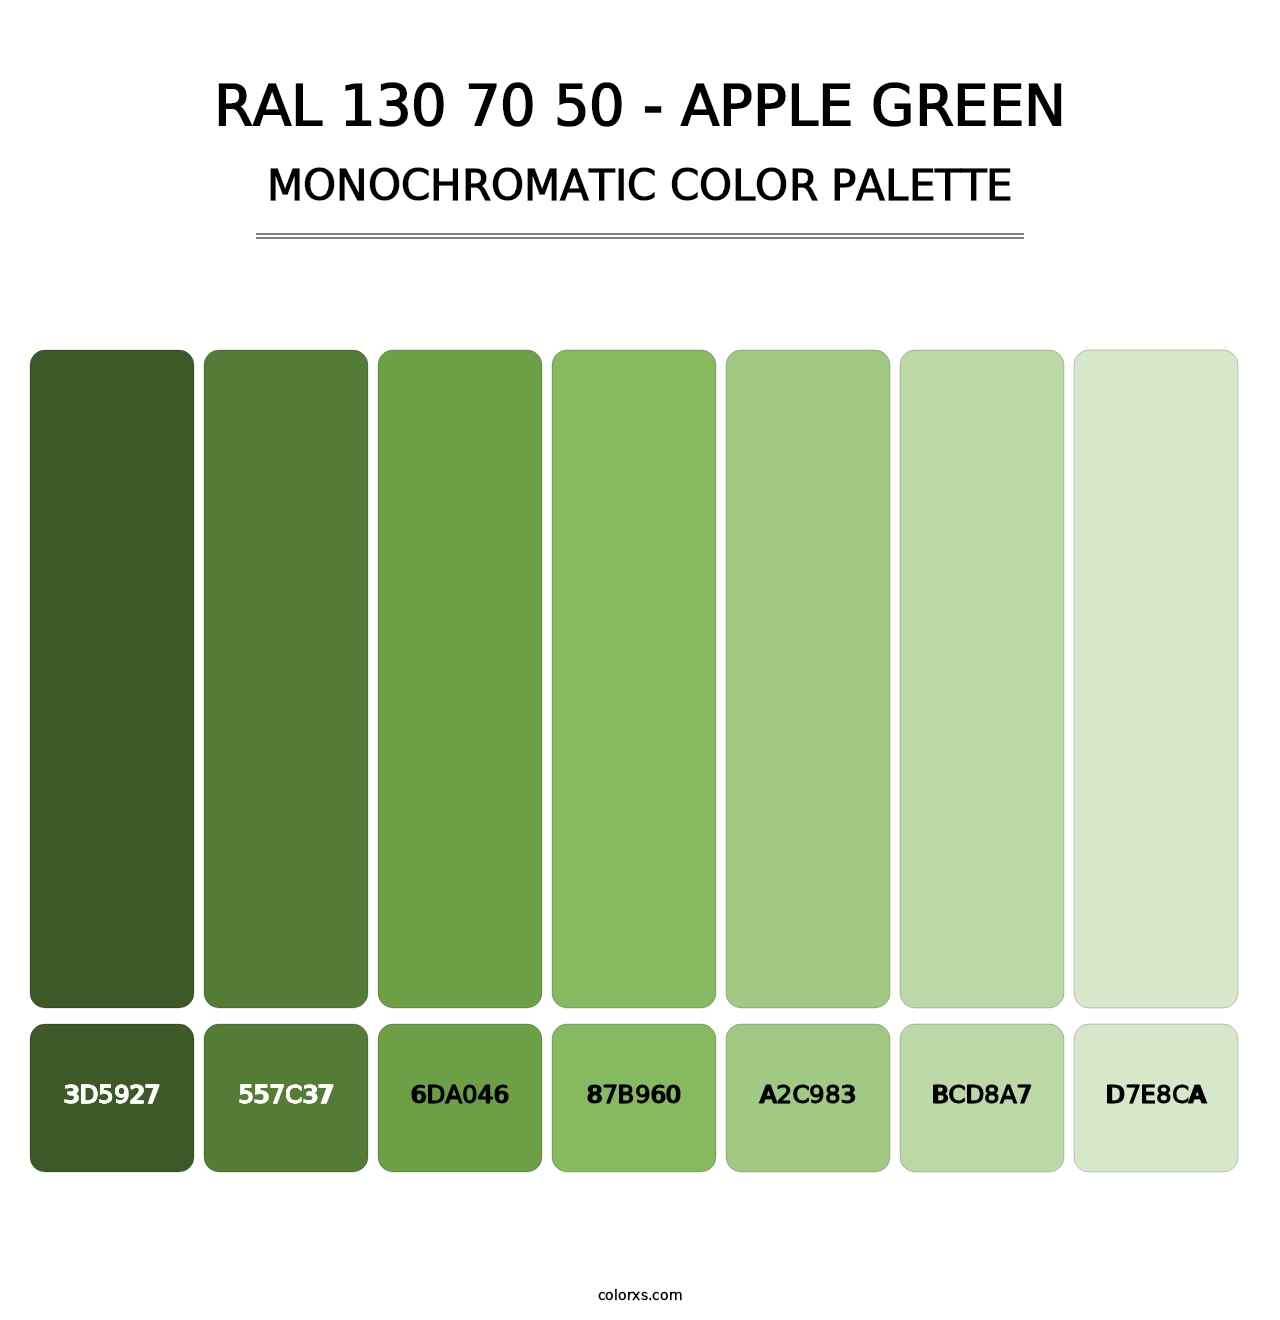 RAL 130 70 50 - Apple Green - Monochromatic Color Palette